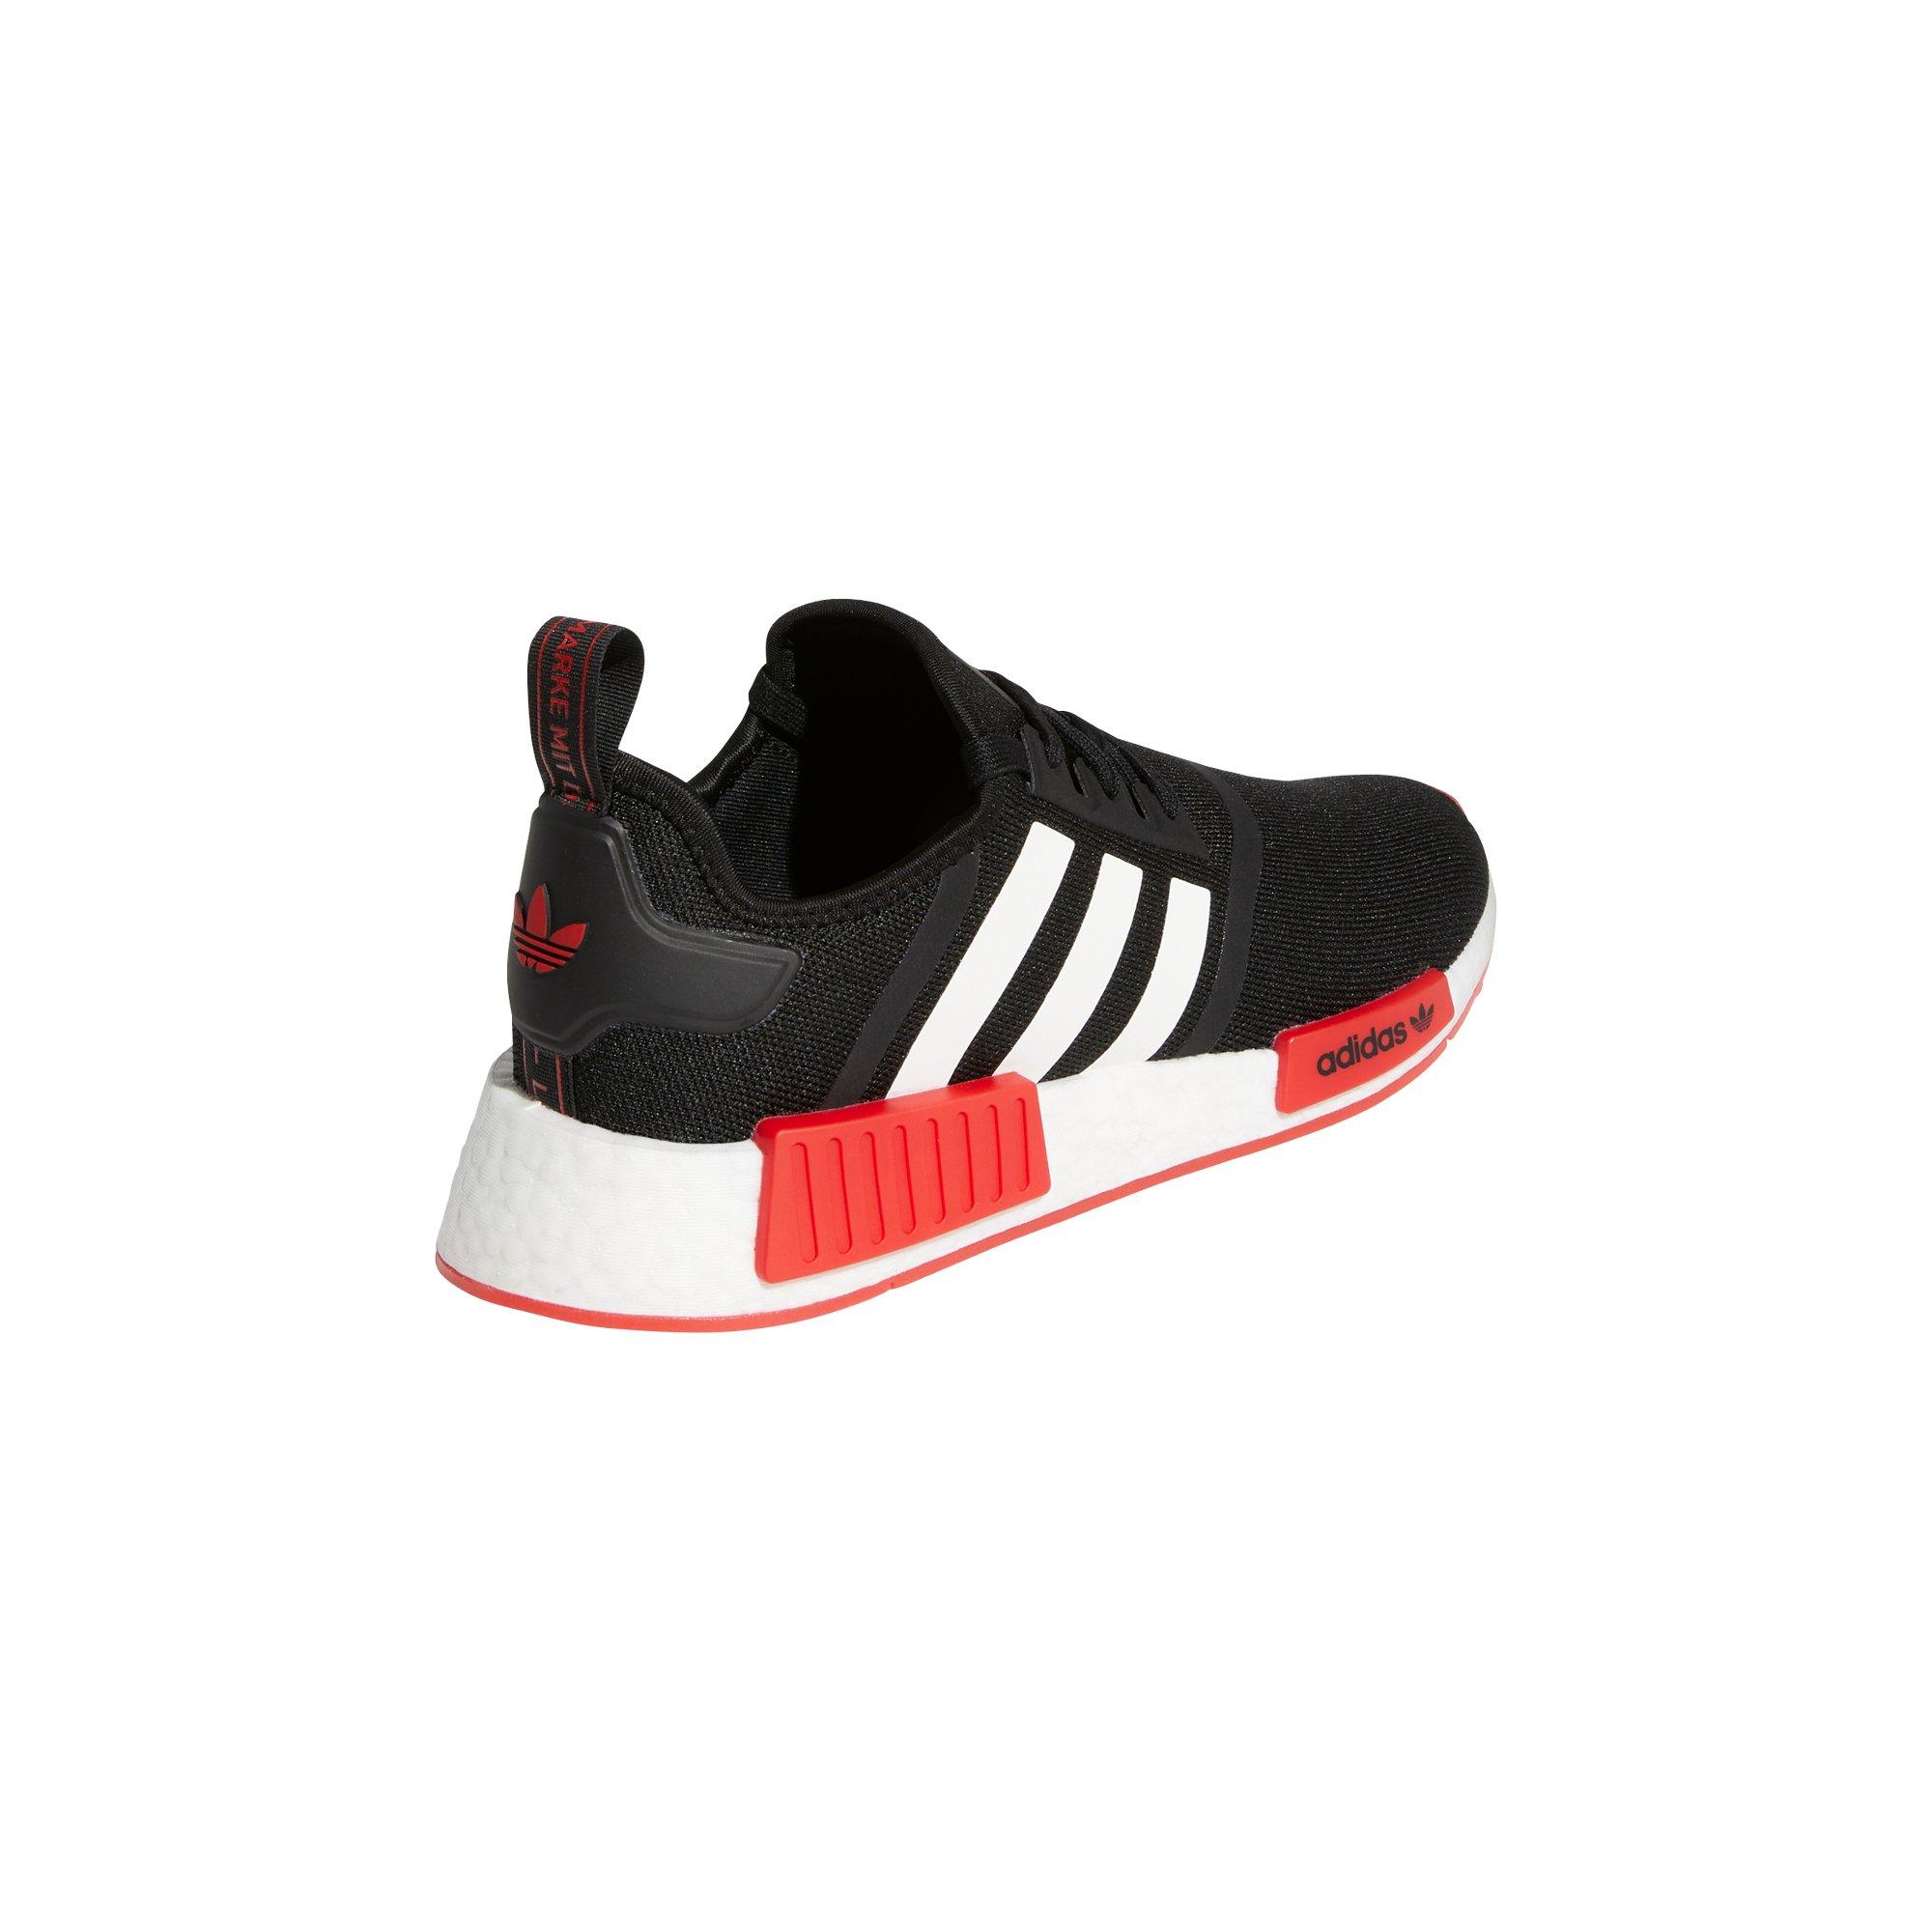 Advertentie dienblad assistent adidas NMD_R1 "Core Black/Ftwr White/Vivid Red" Men's Running Shoe